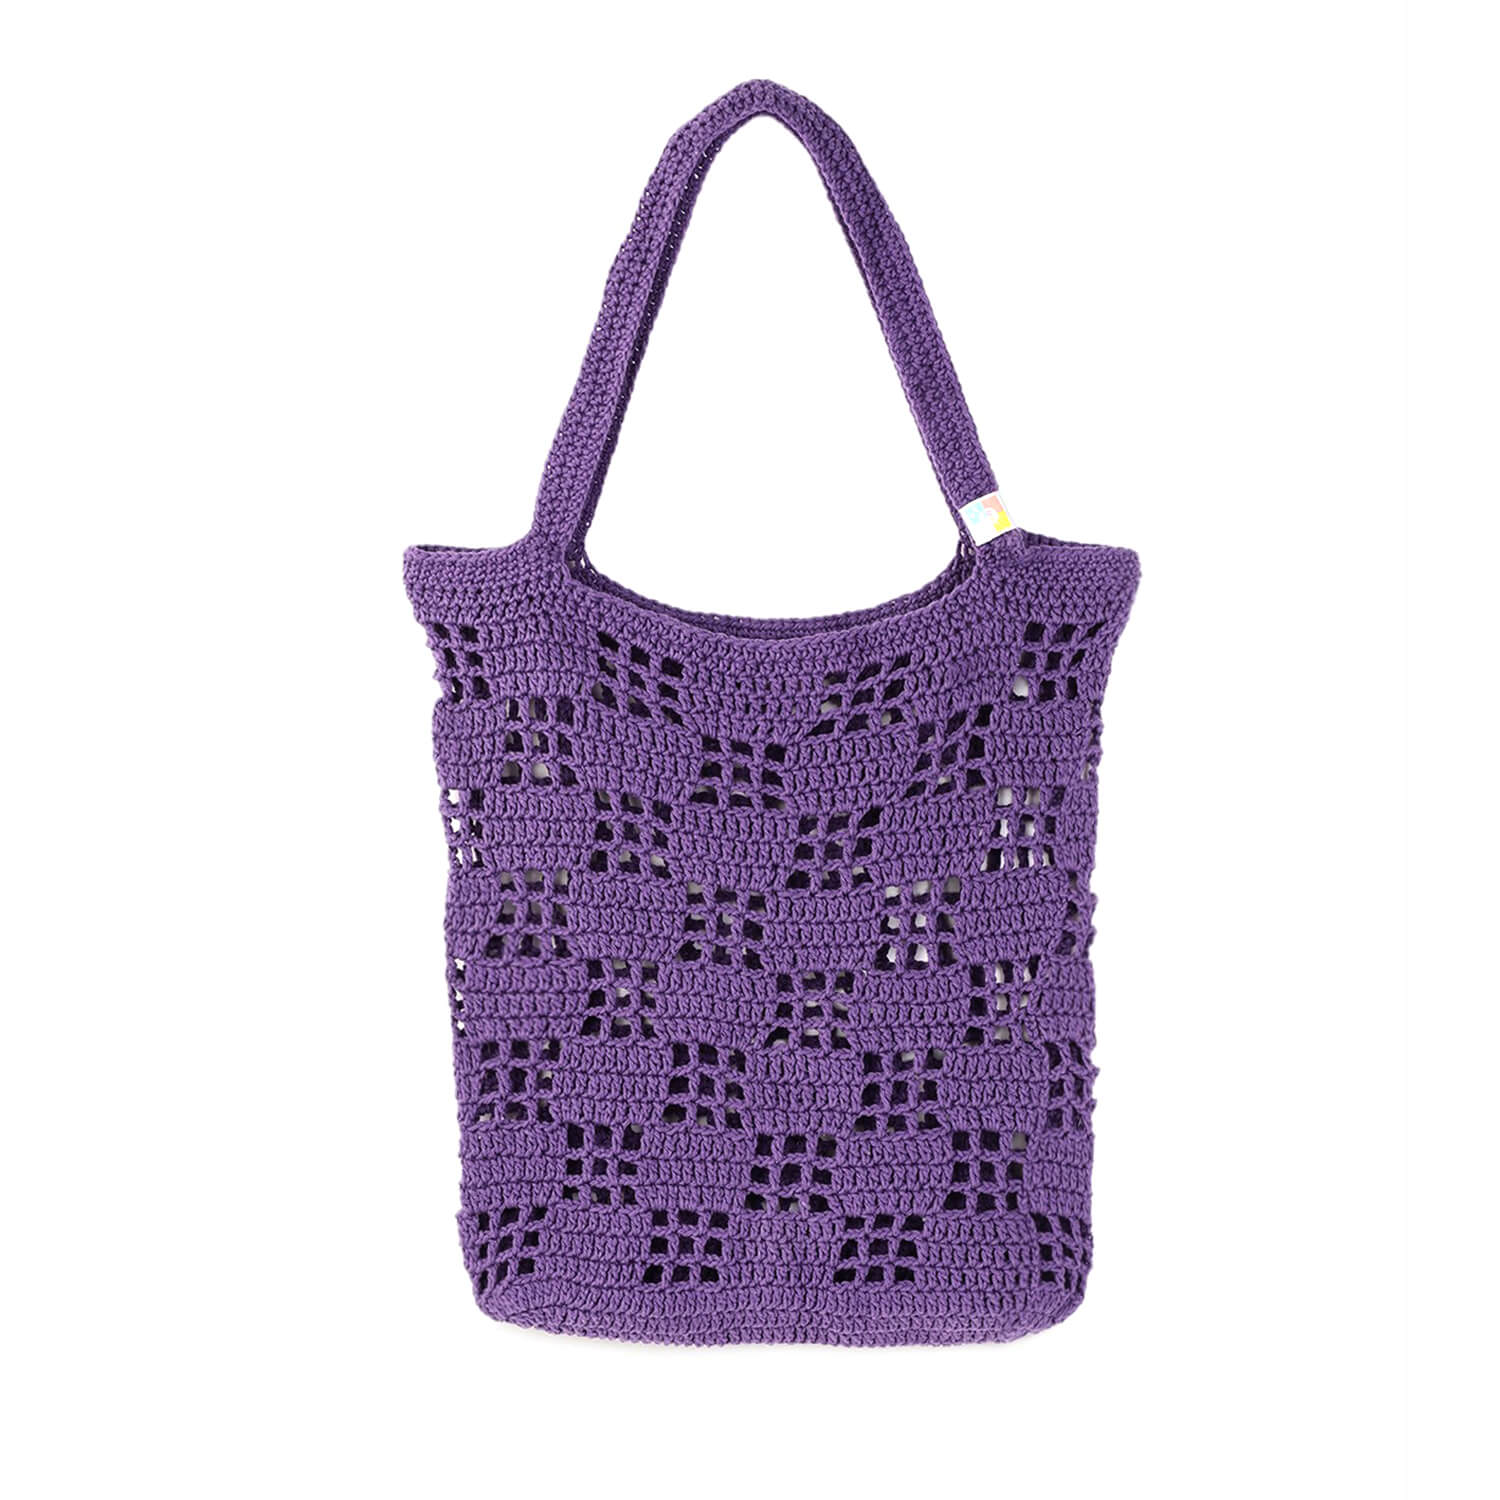 Handmade Crochet Market Bag - Dark Purple 2650